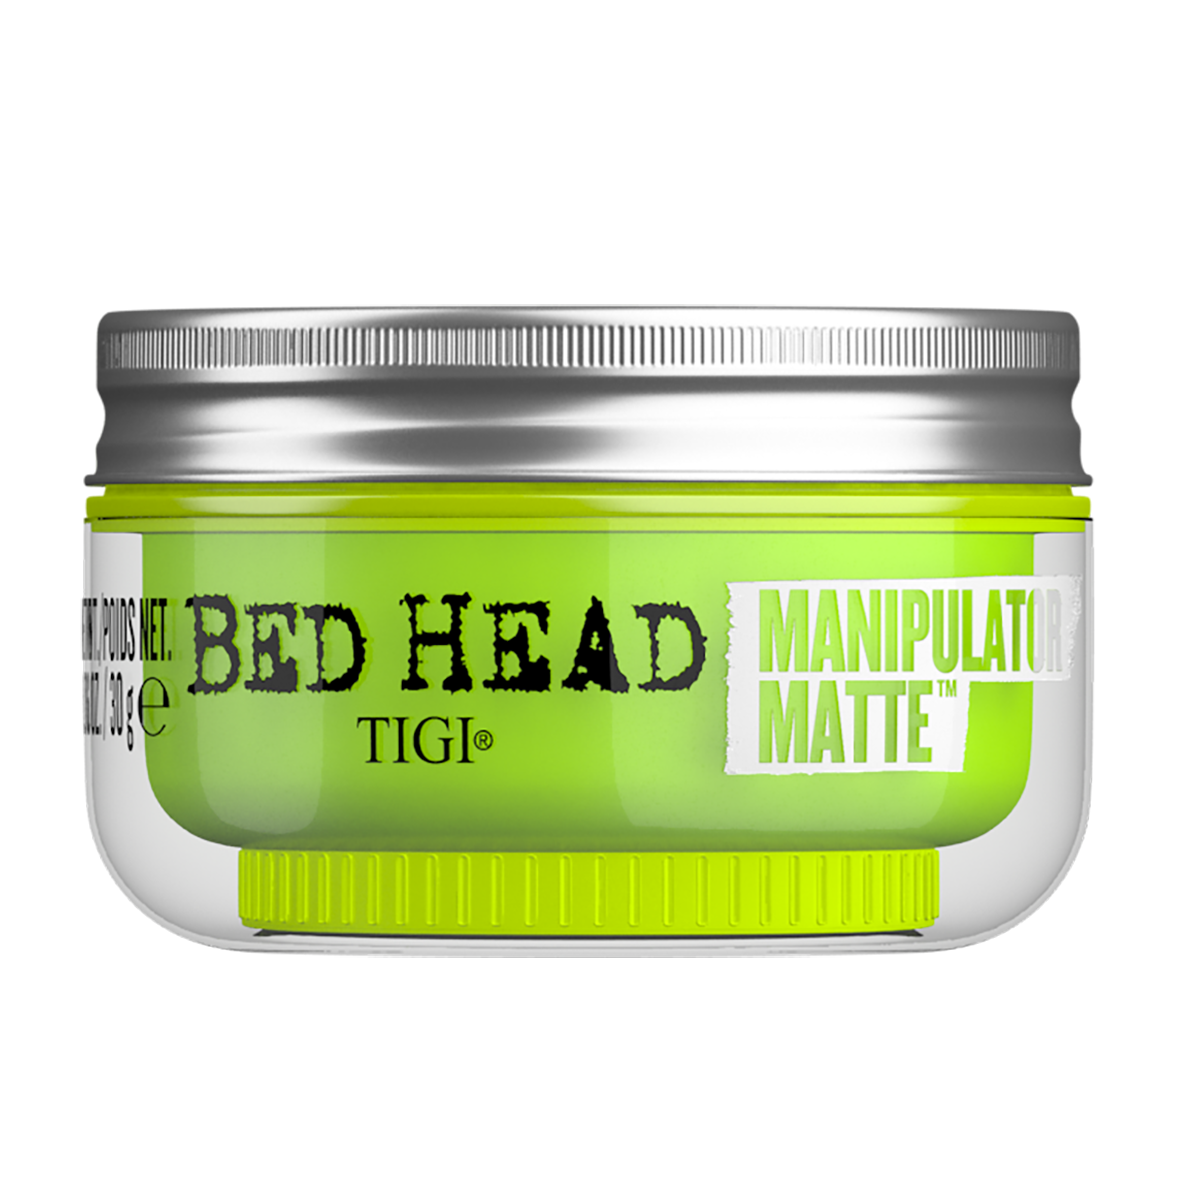 Bed Head Manipulator Matte 57g 57g